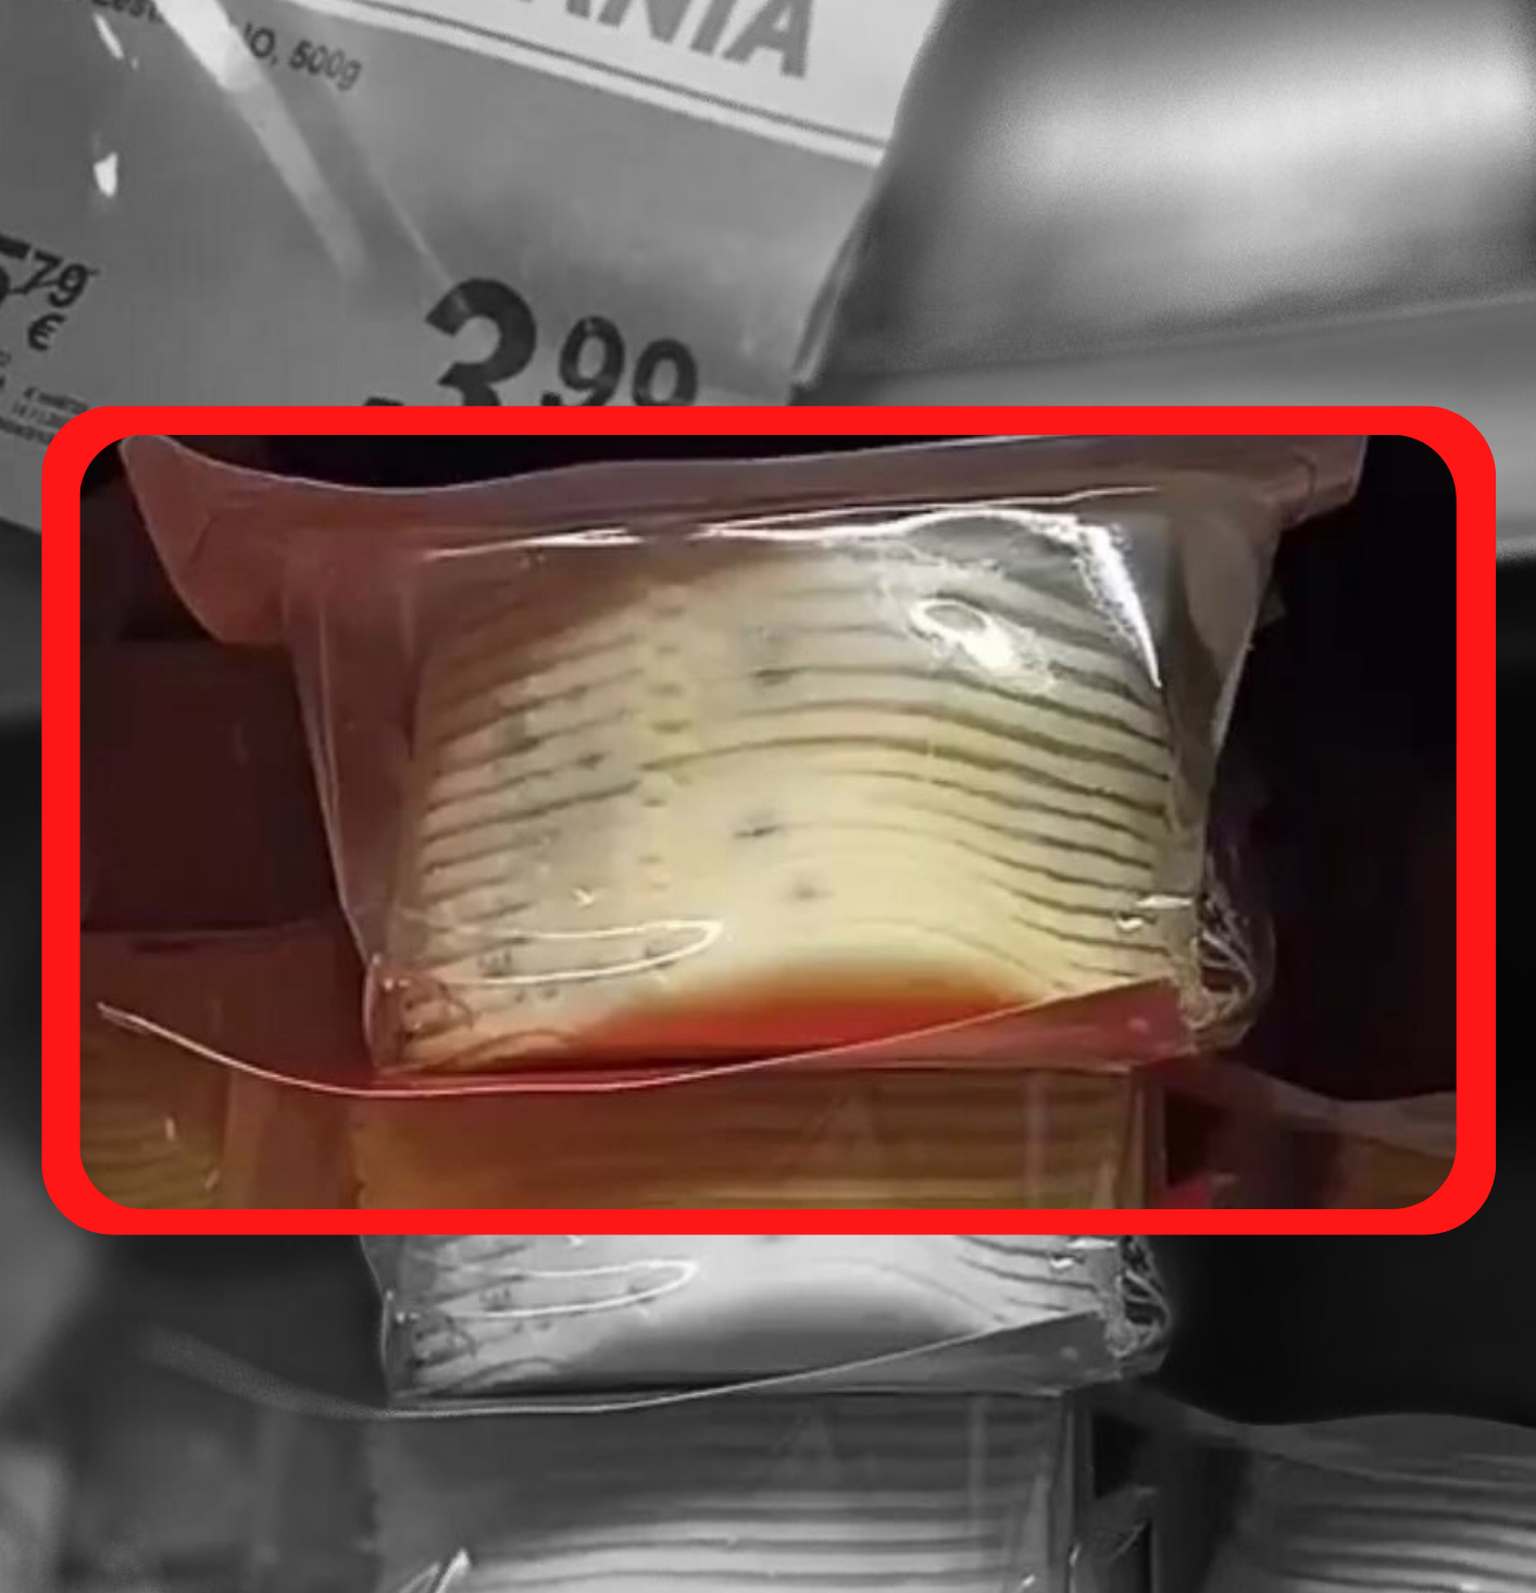 Испорченный сыр на прилавке магазина.